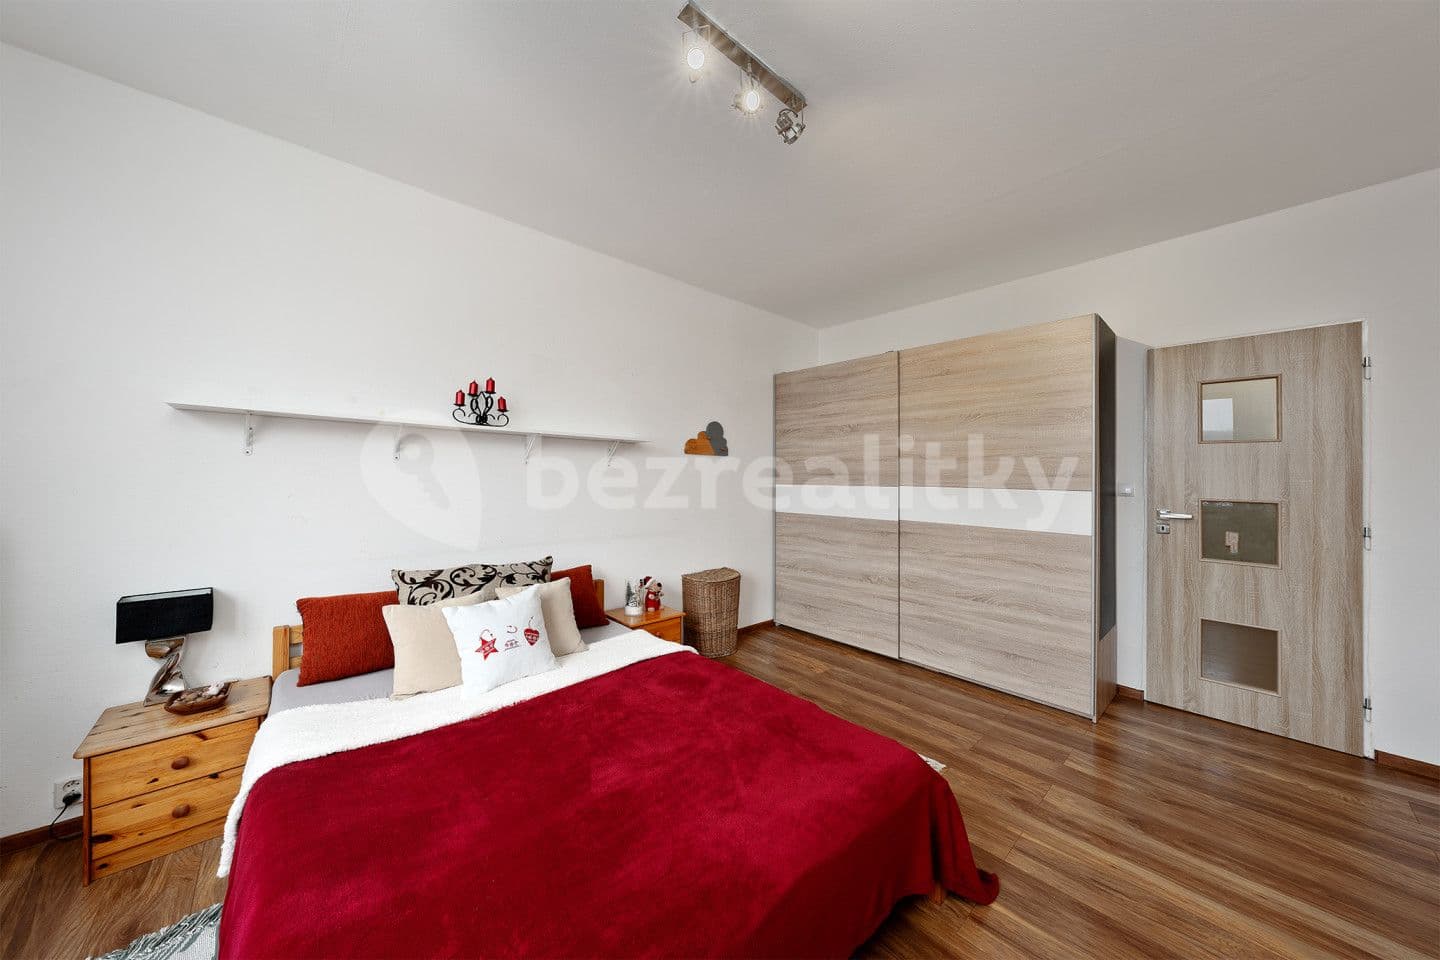 2 bedroom flat for sale, 58 m², Na rovině, Jílové, Ústecký Region